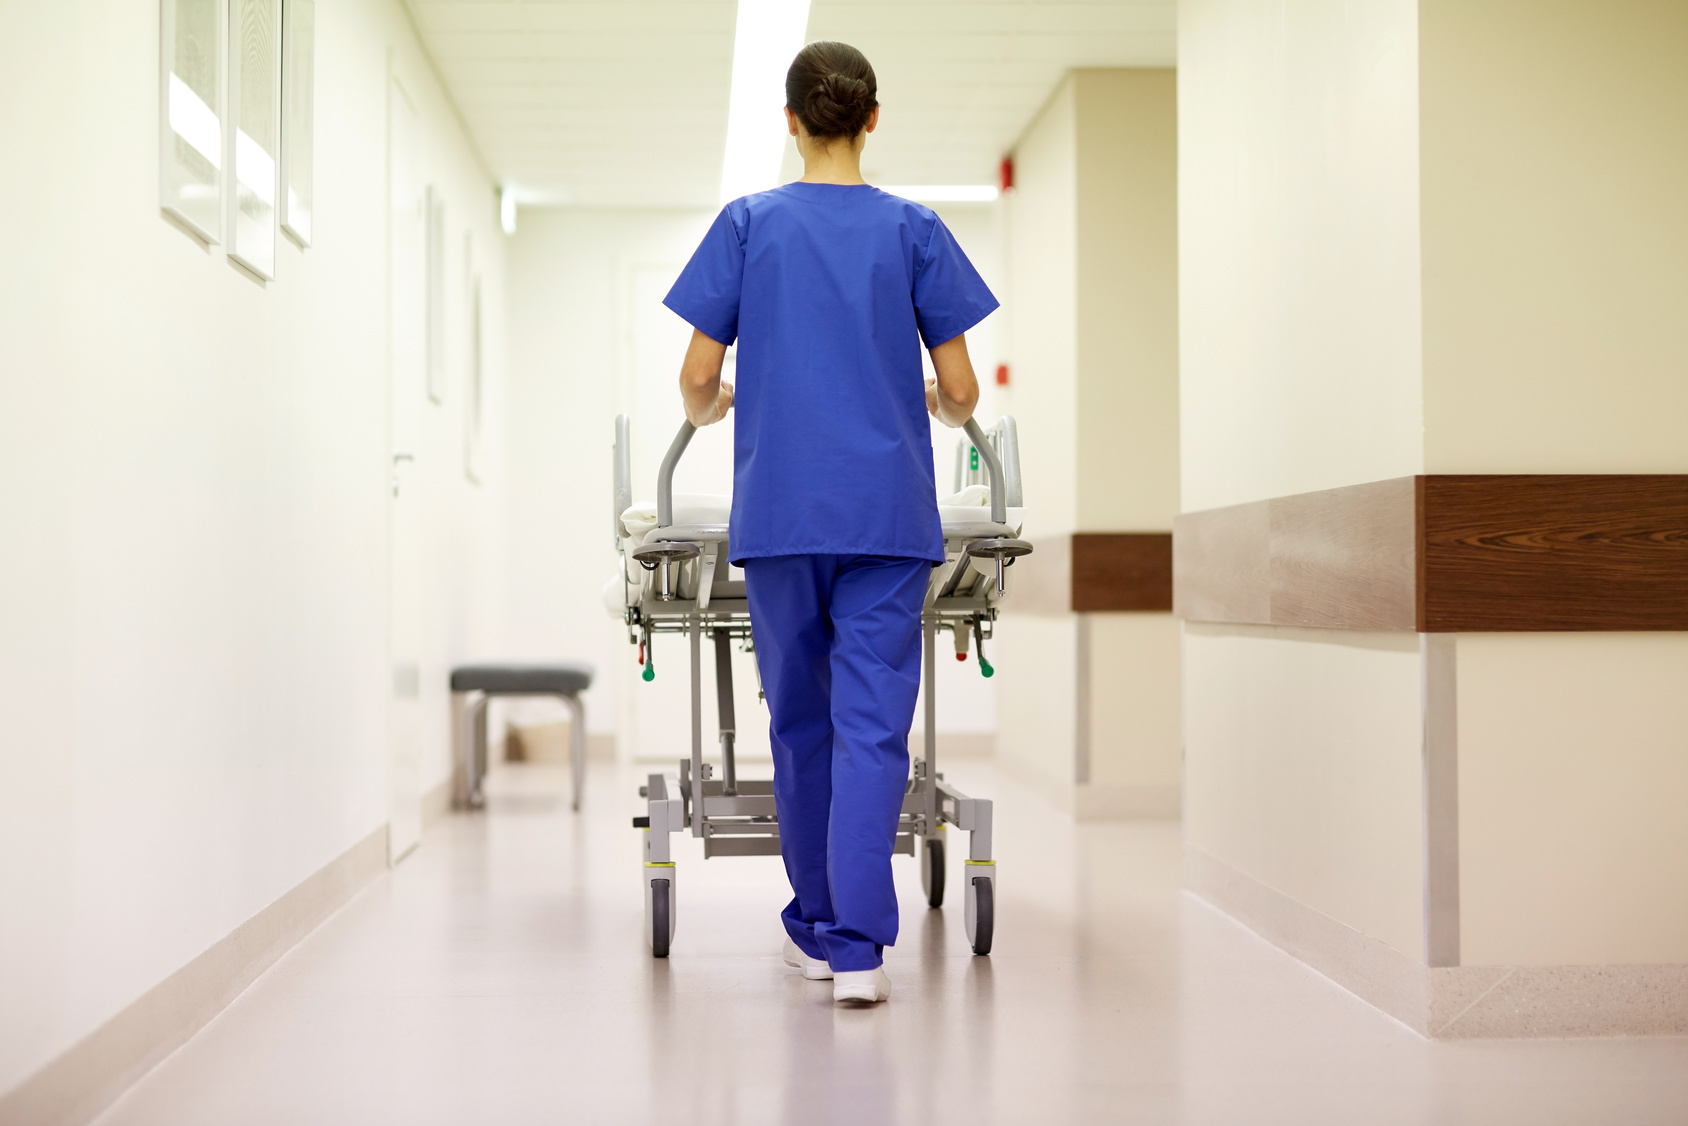 The #1 Reason Nurses Leave Their Jobs